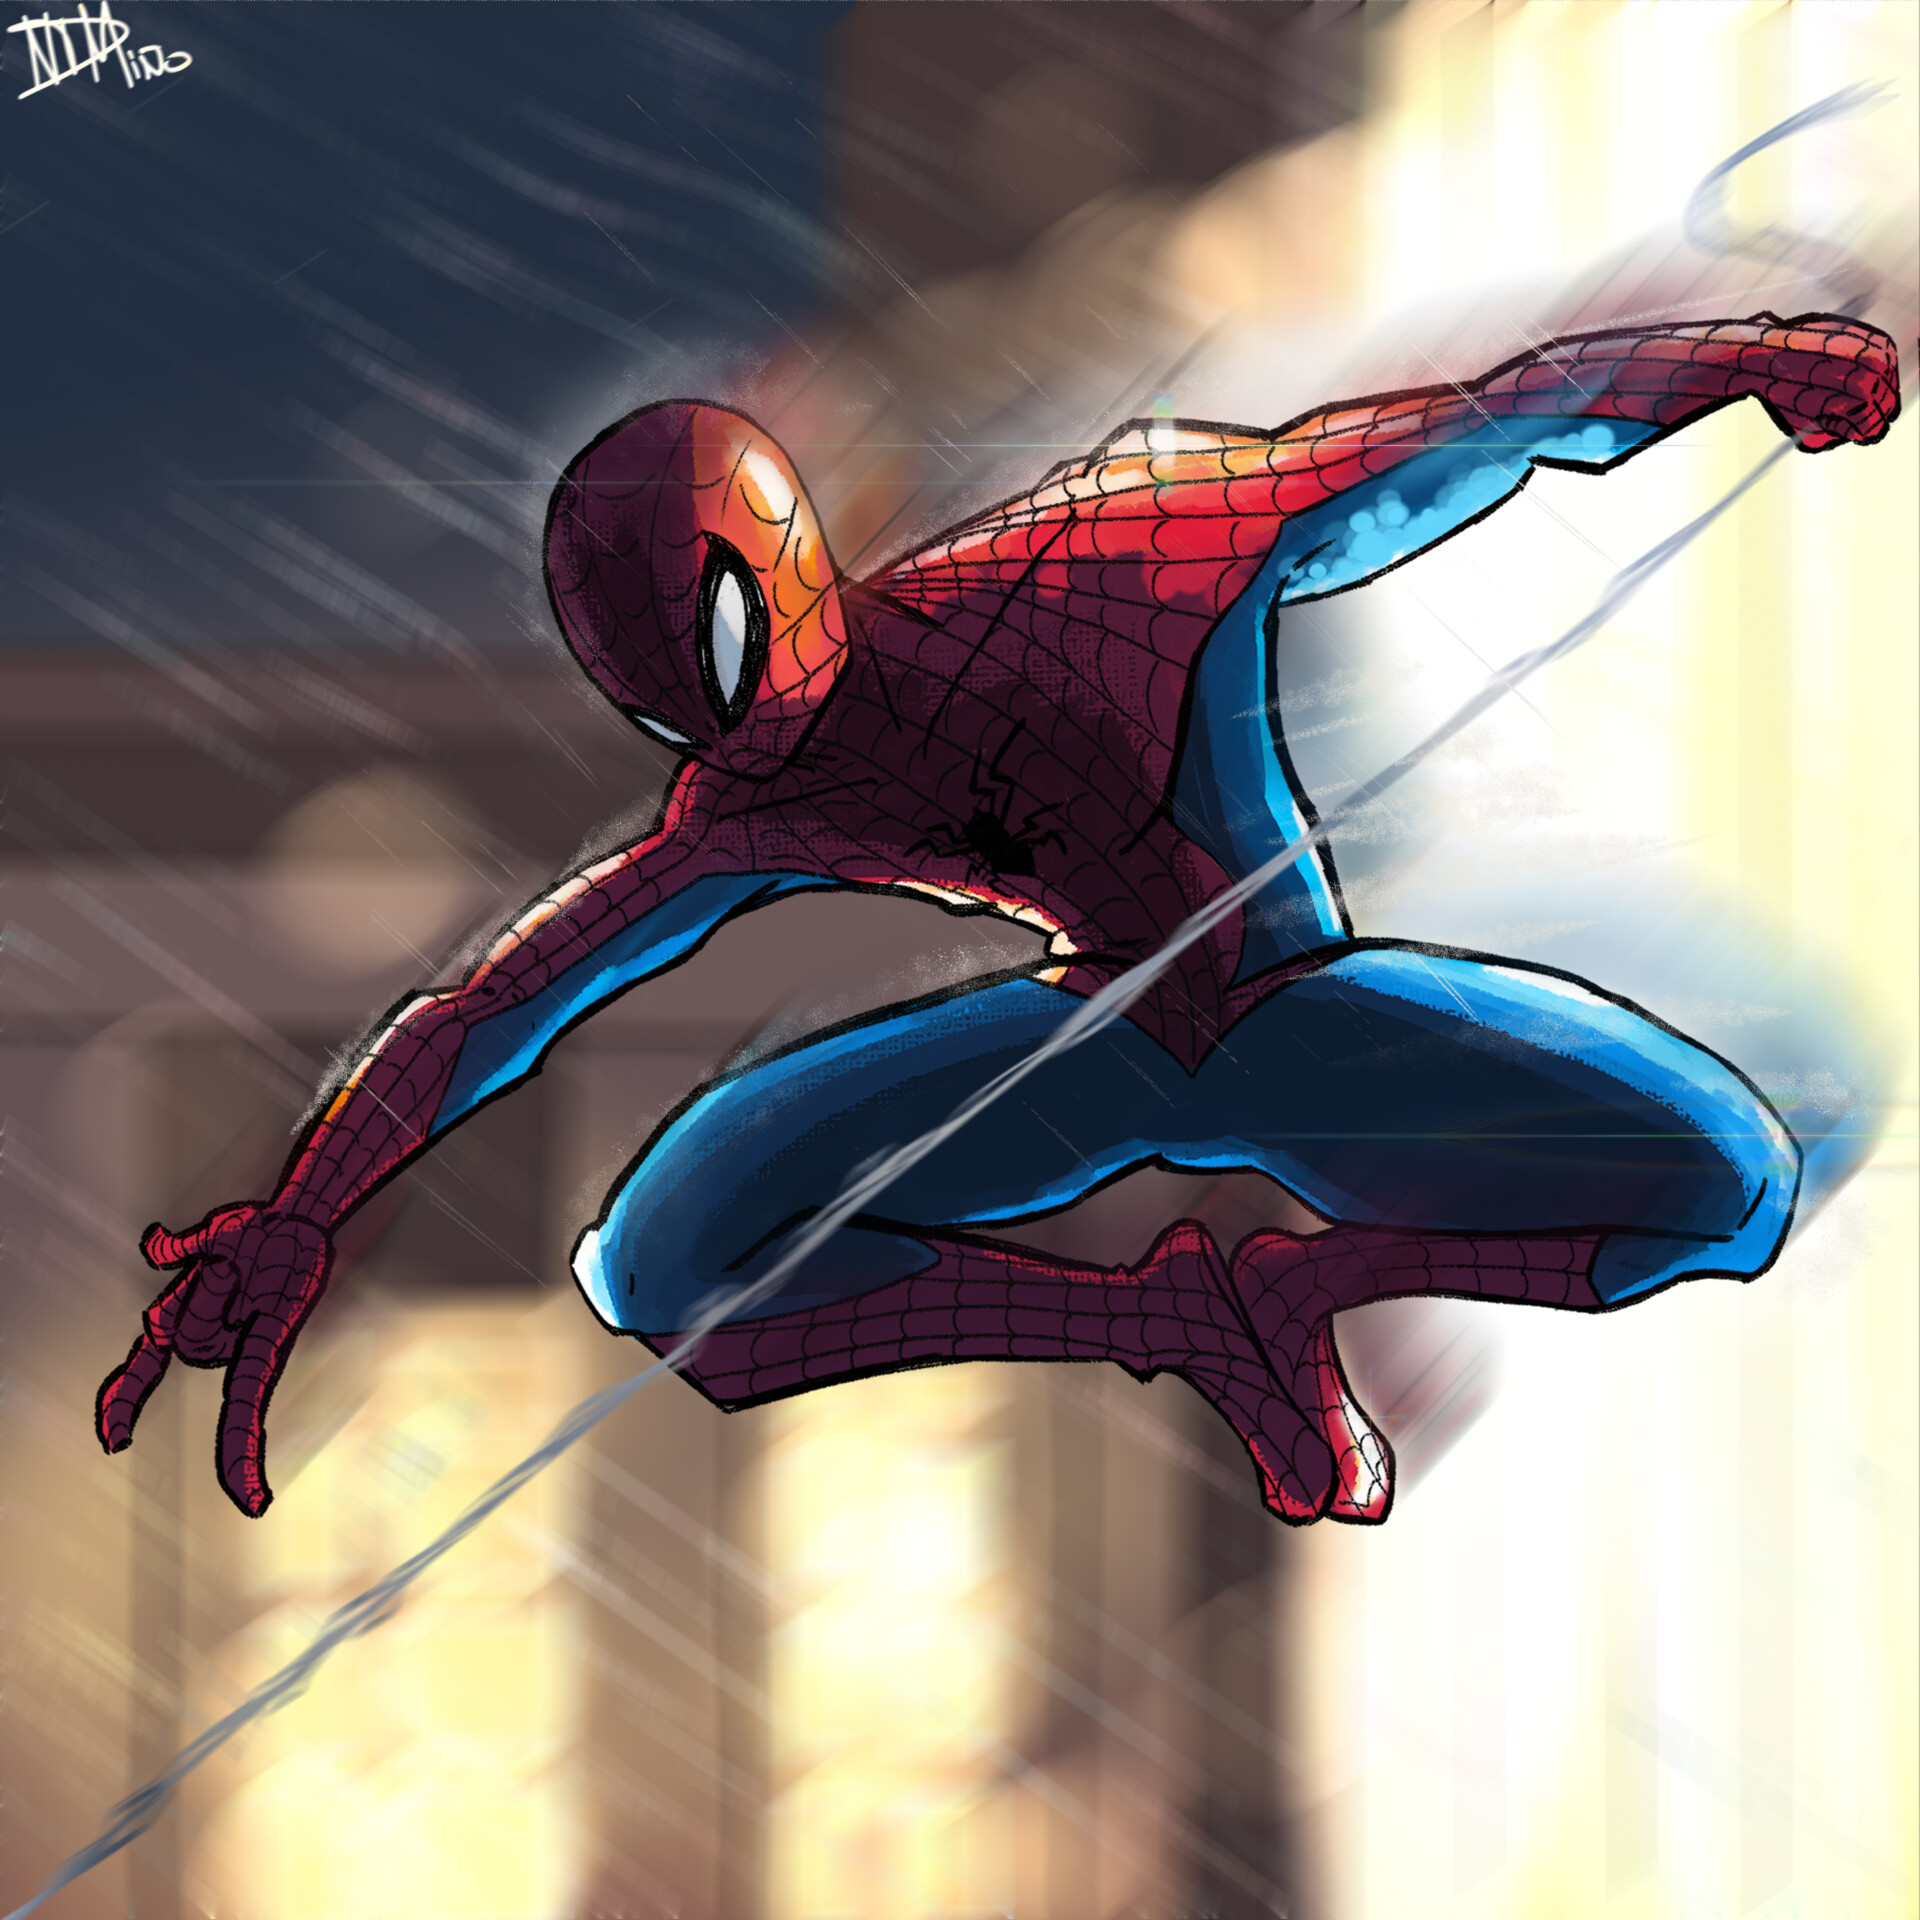 ArtStation - Spider Man swinging in the city